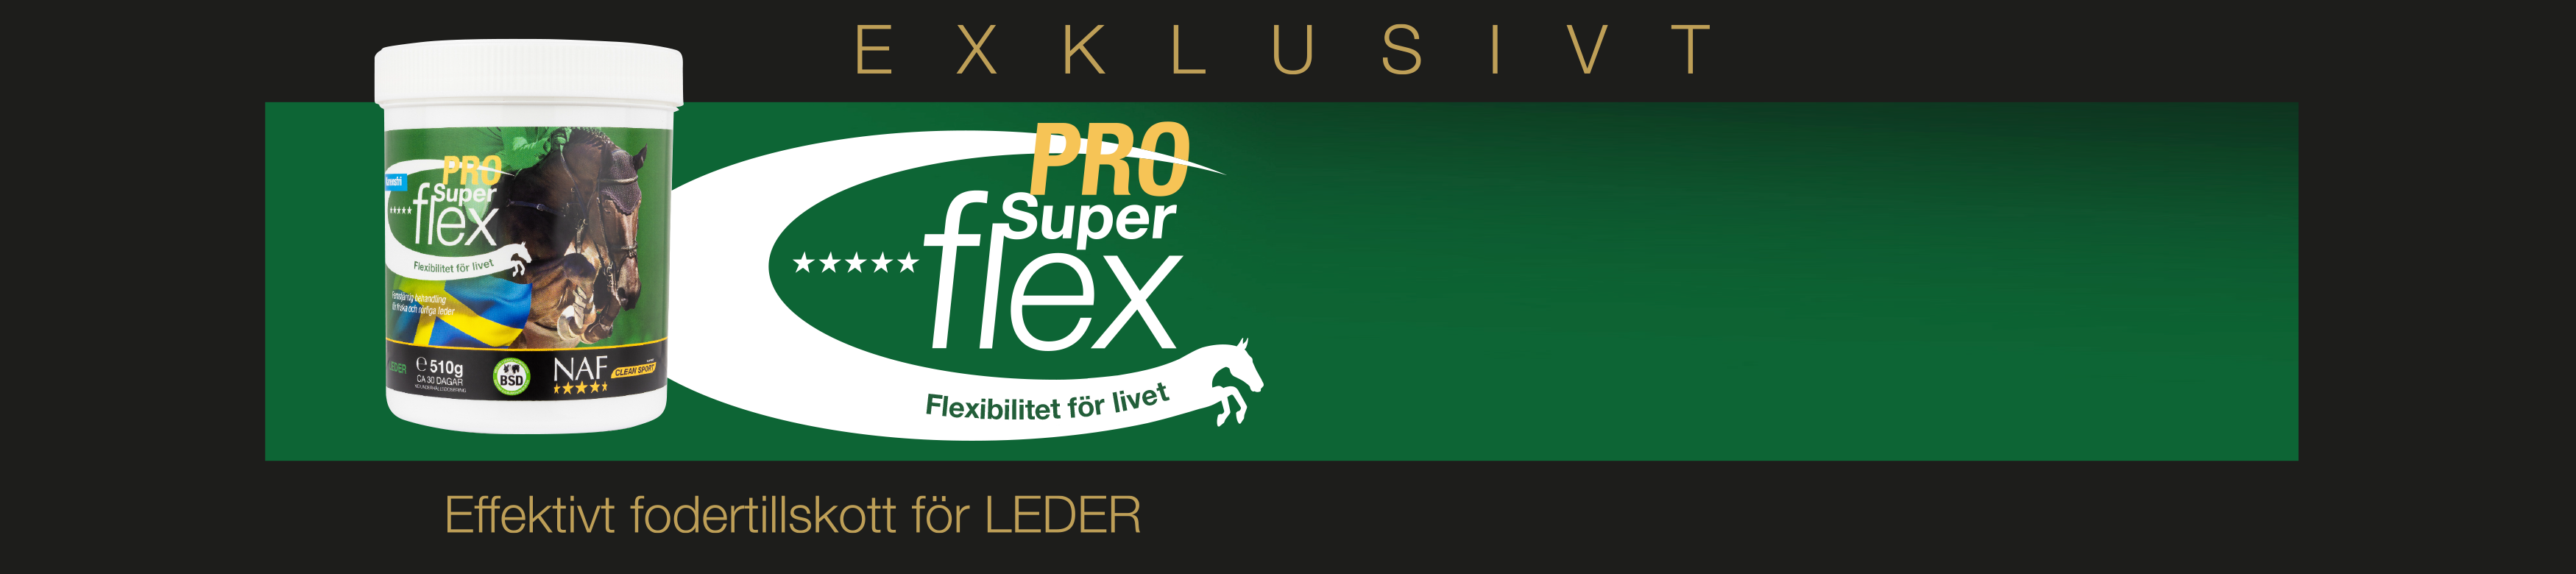 PRO Superflex